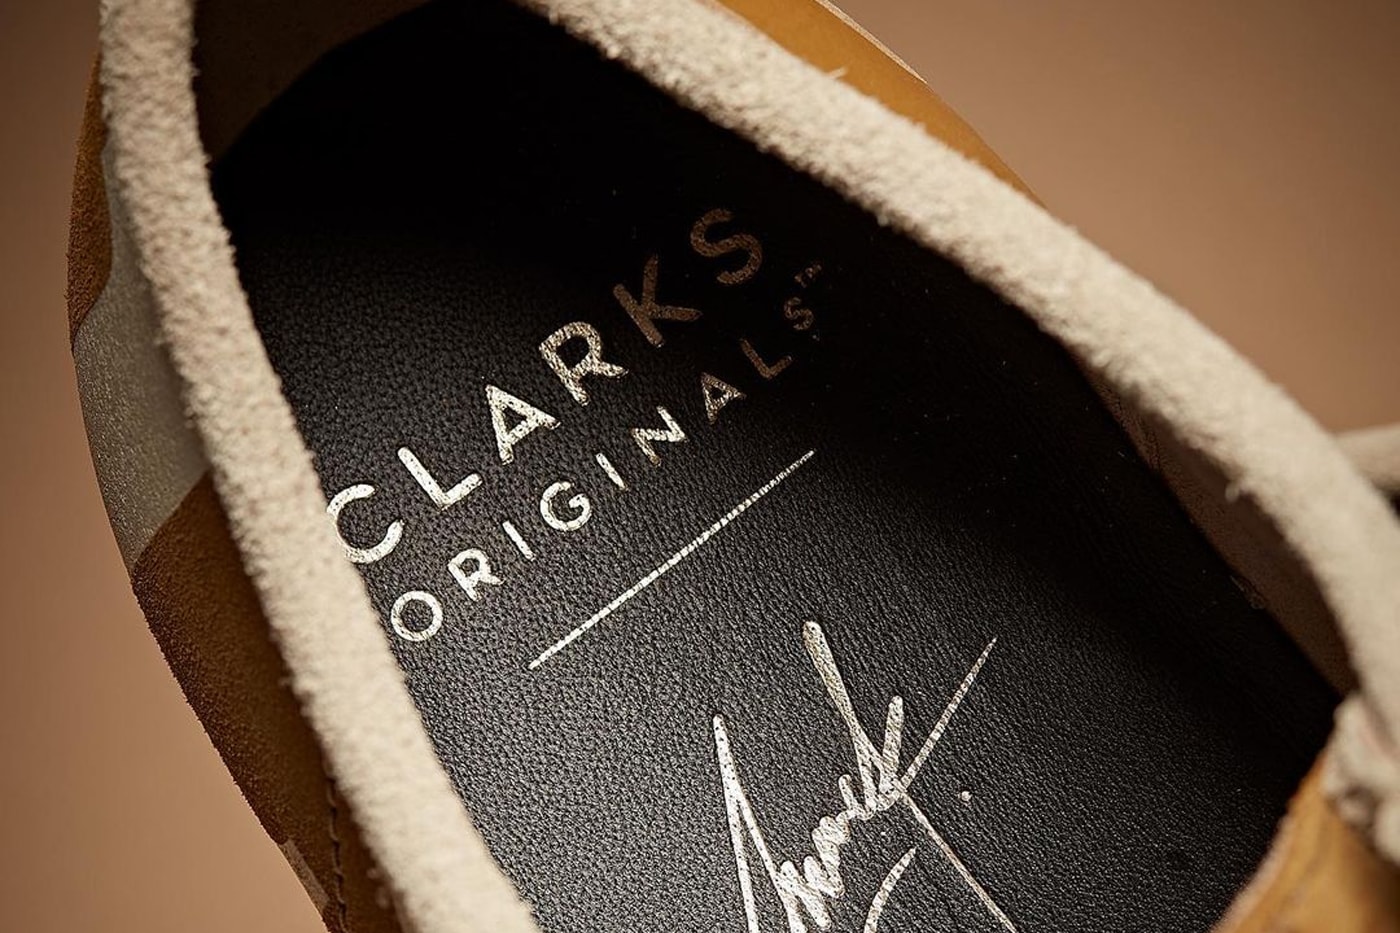 Clarks Originals franck pellegrino wallabee color block patchwork premium suede three colorway release info date price